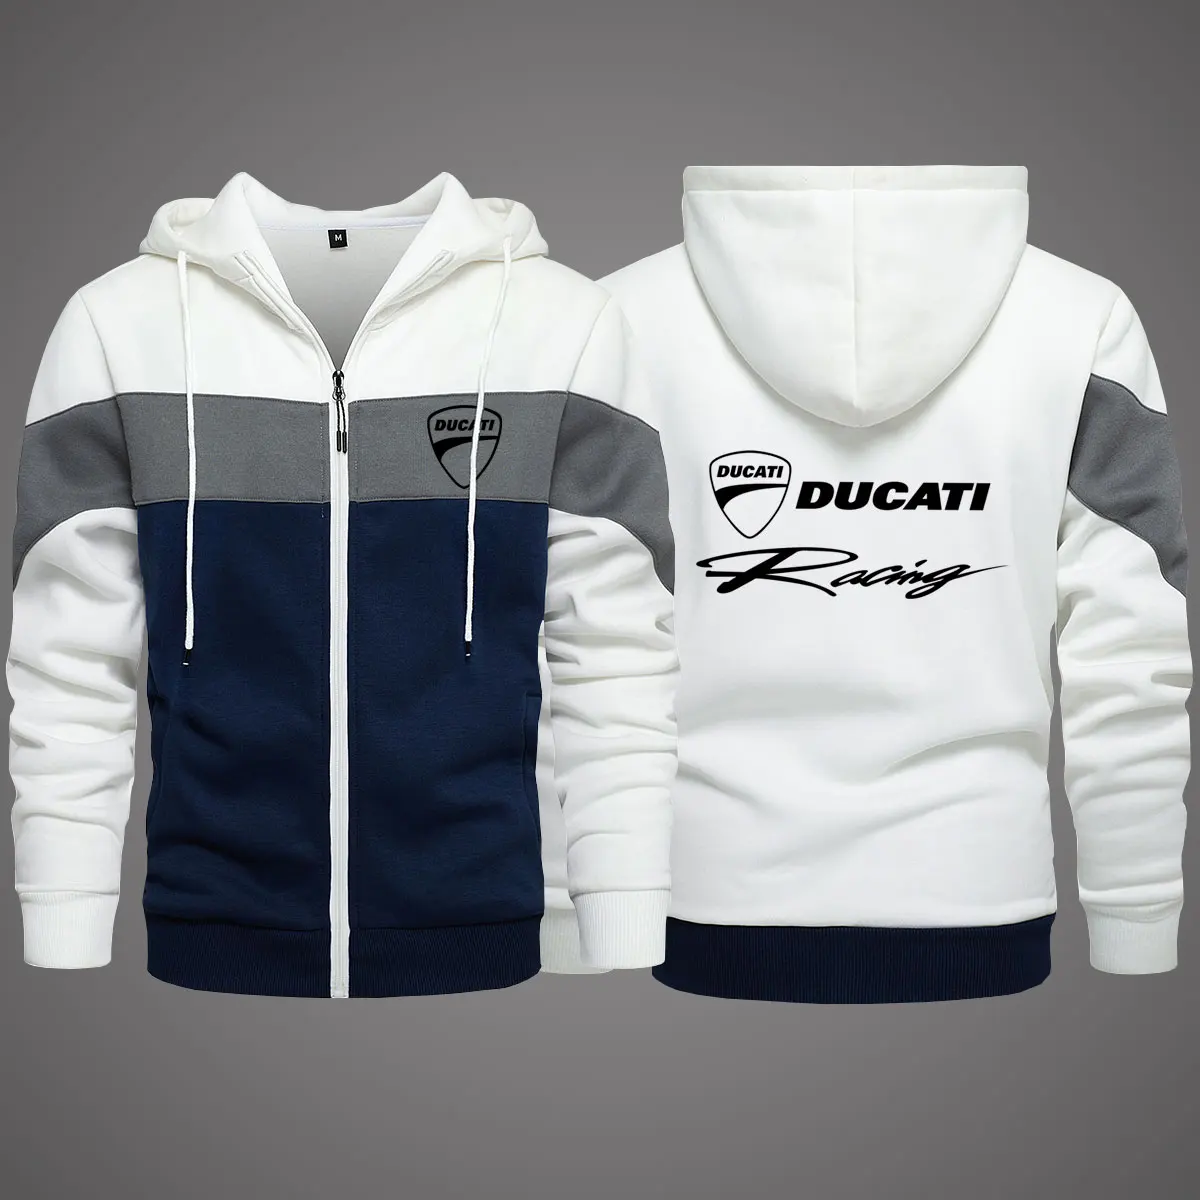 

2022 New Ducati Men's Clothing Outdoor Sweatshirt Casual Male Jacket Fleece Warm Slim Hoodies Quality SportWear Harajuku Outwear